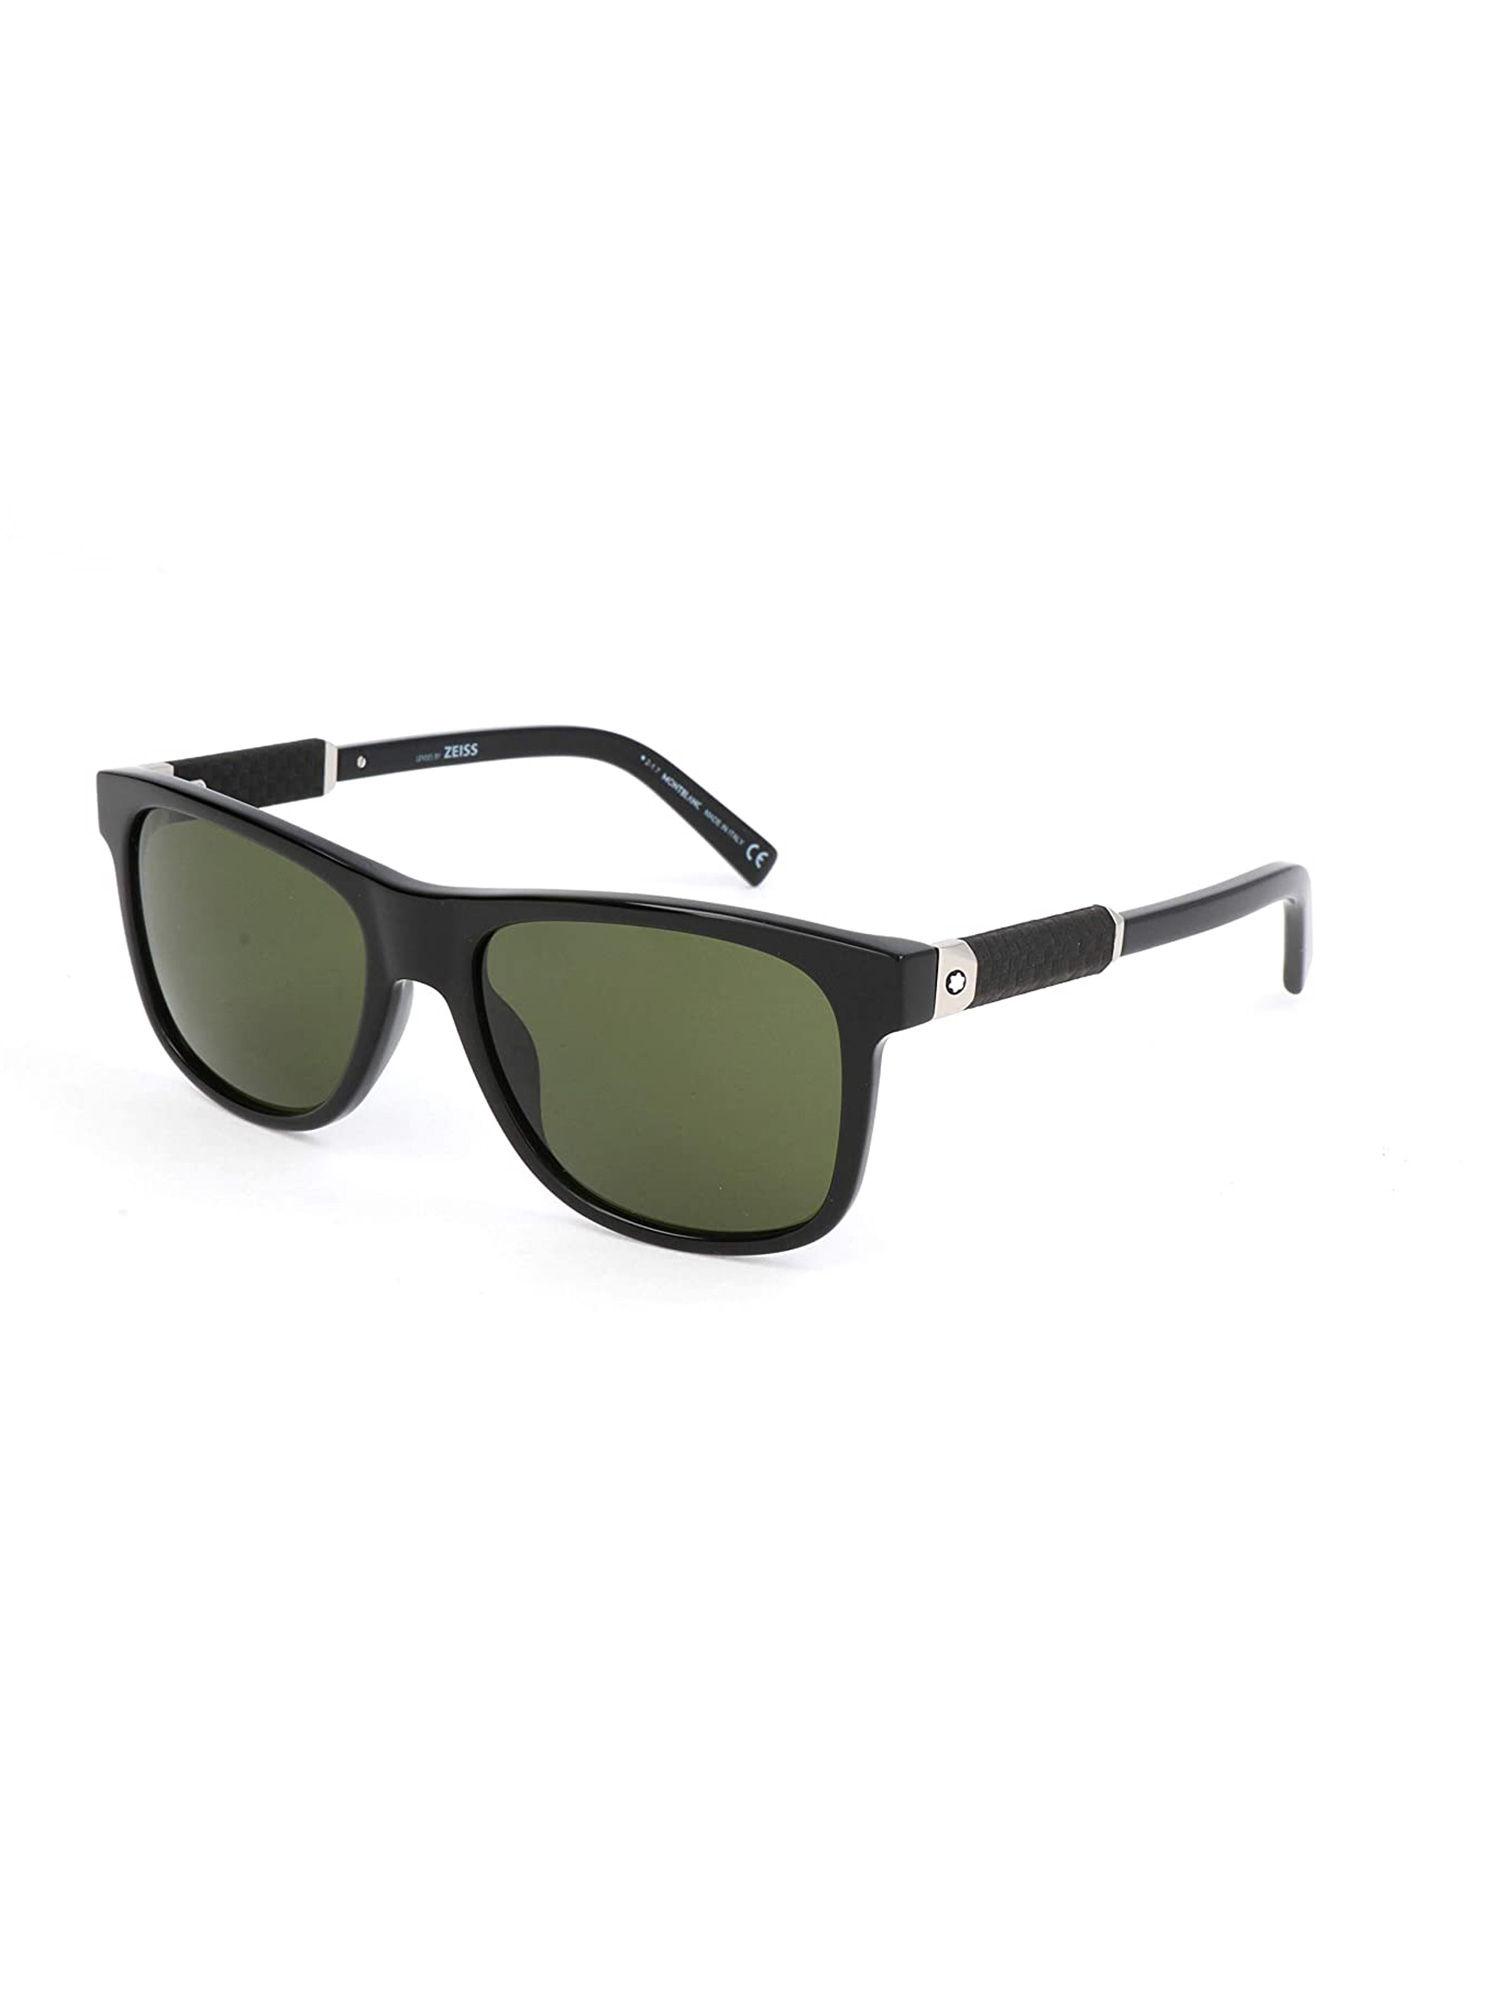 green plastic sunglasses